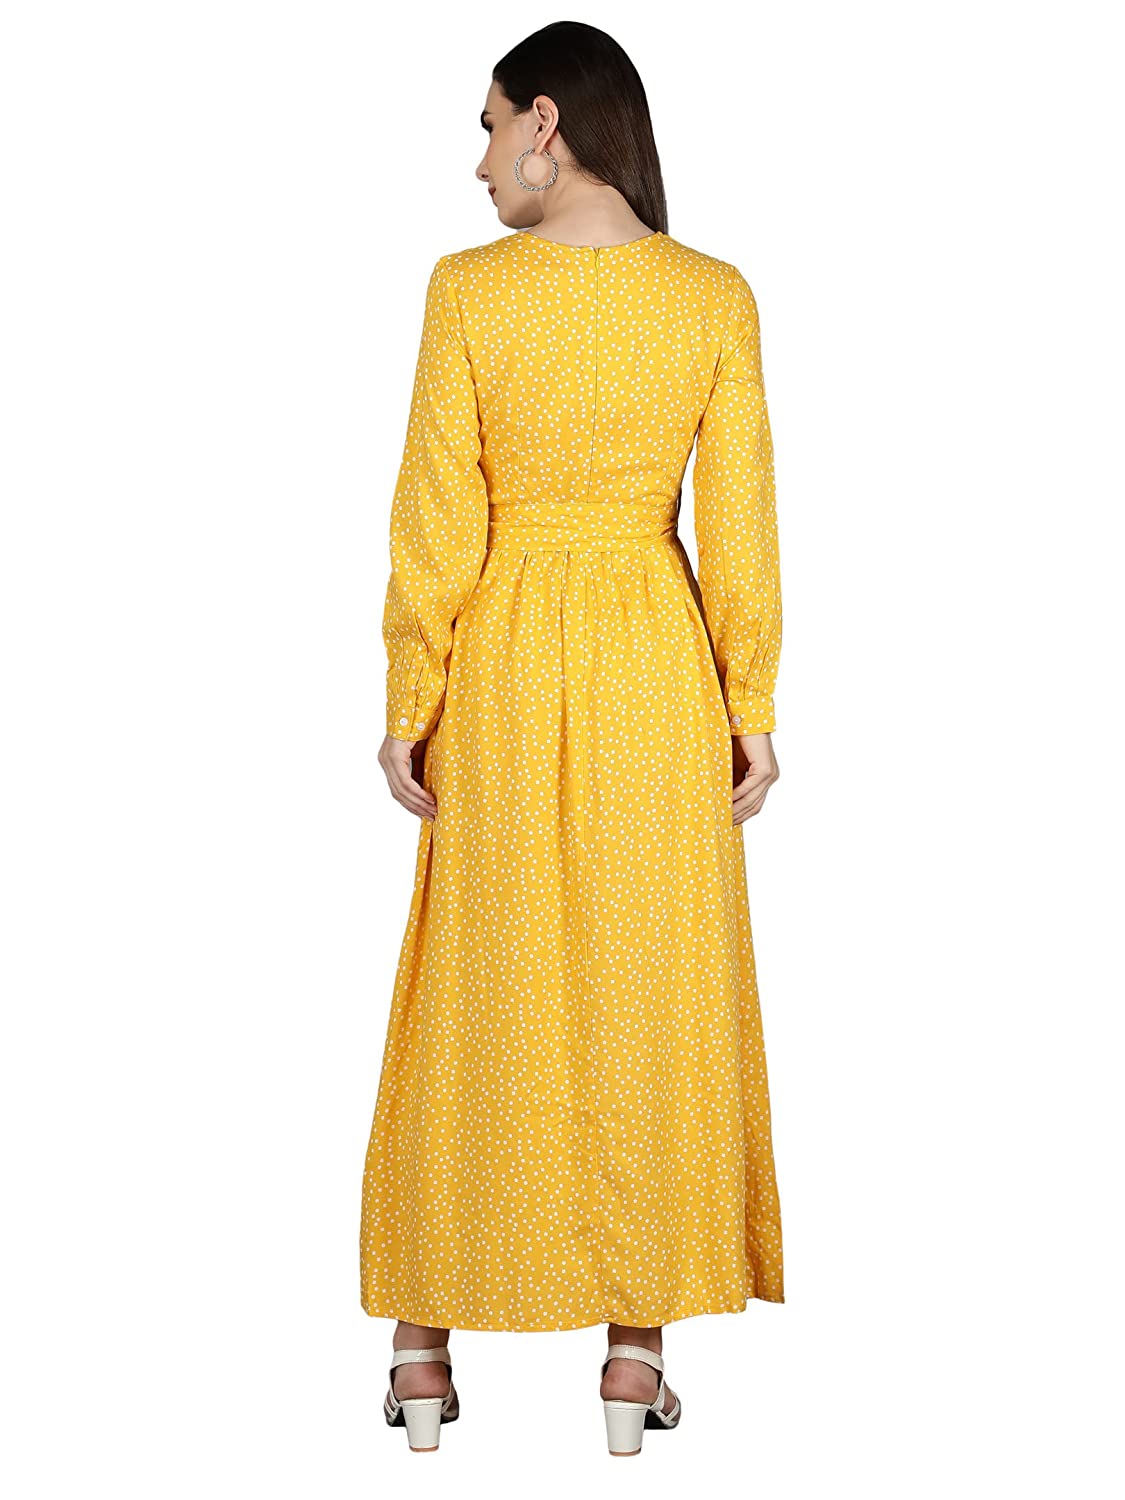 NUEVOSDAMAS Women Rayon Dot Printed Designer Dress | Latest Western Maxi Dress | Full Sleeve Dress for Women | Stylish Summer Maxi Dresses -  Dresses in Sri Lanka from Arcade Online Shopping - Just Rs. 5899!